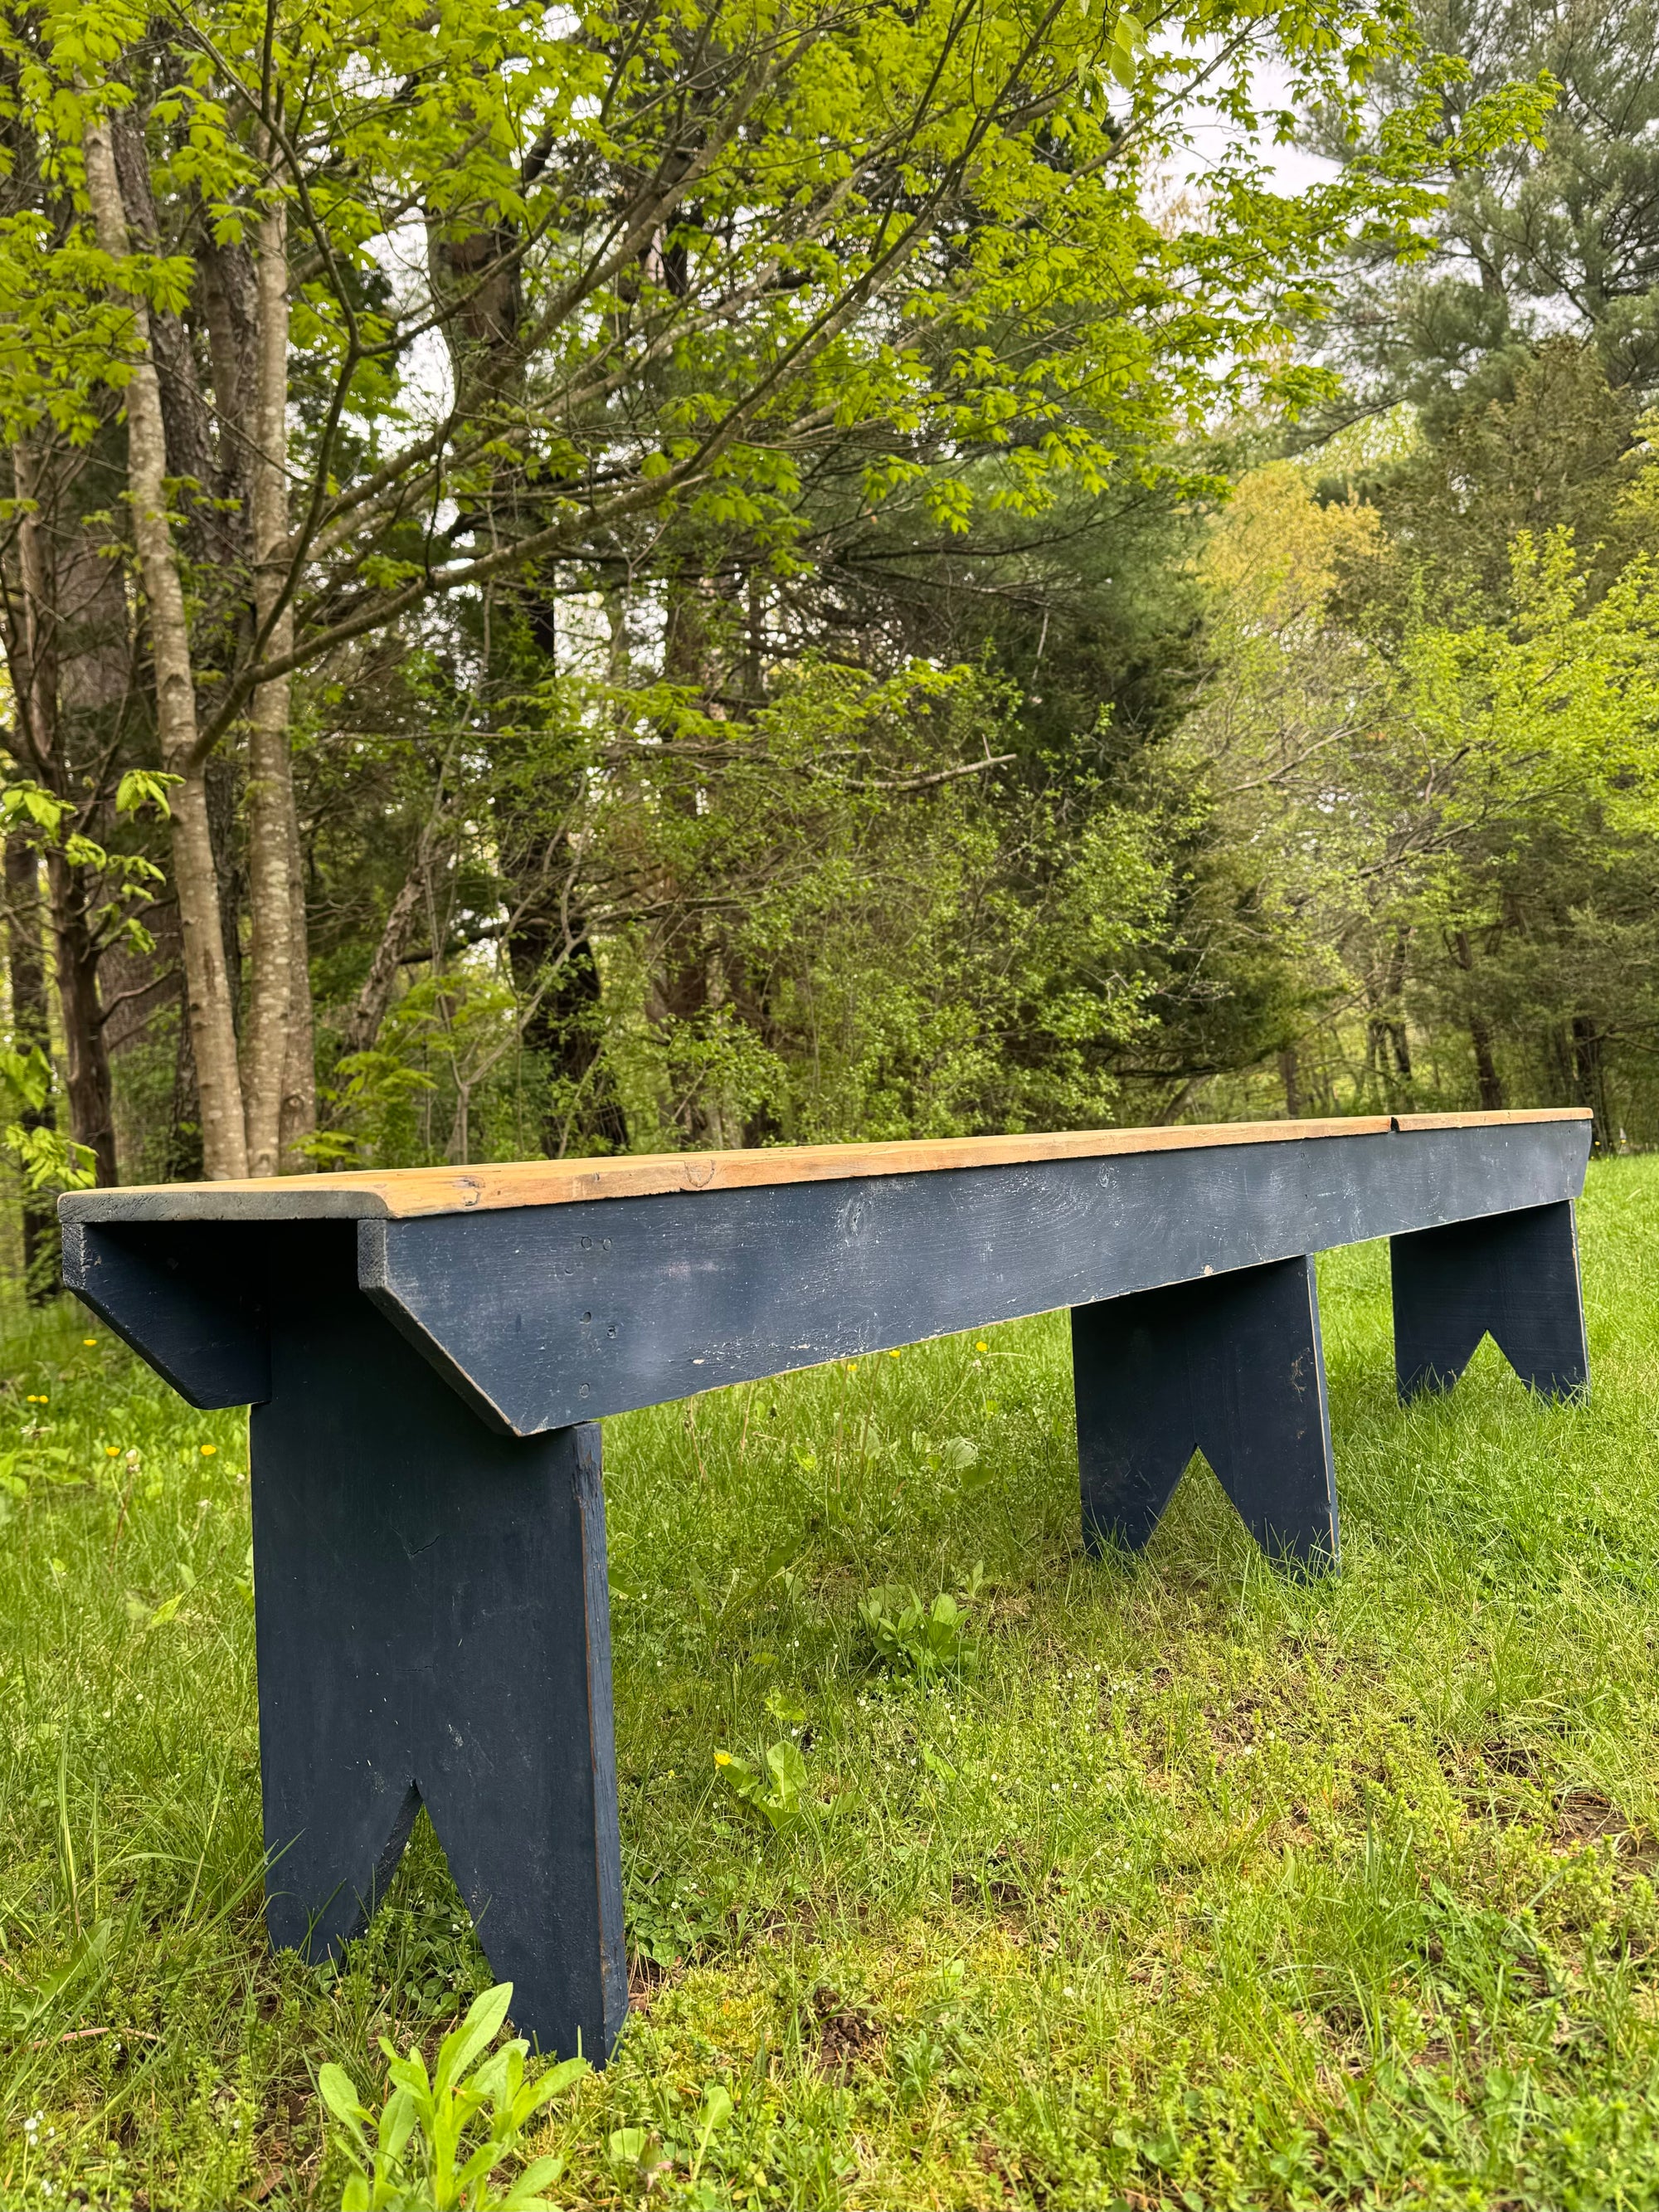 Vintage Navy Blue Wood Bench - 8’ long